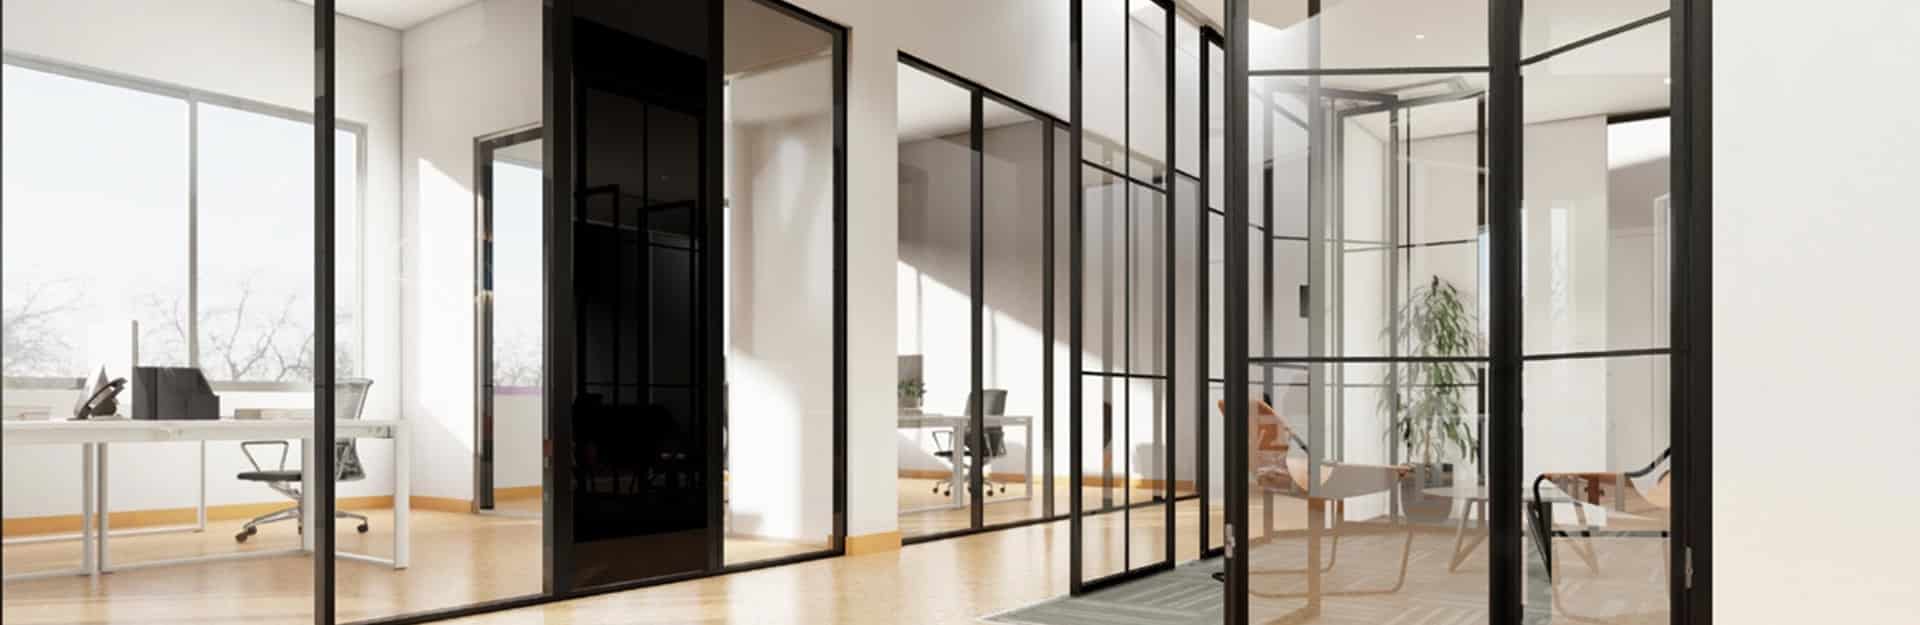 office space designed using Falkbuilt